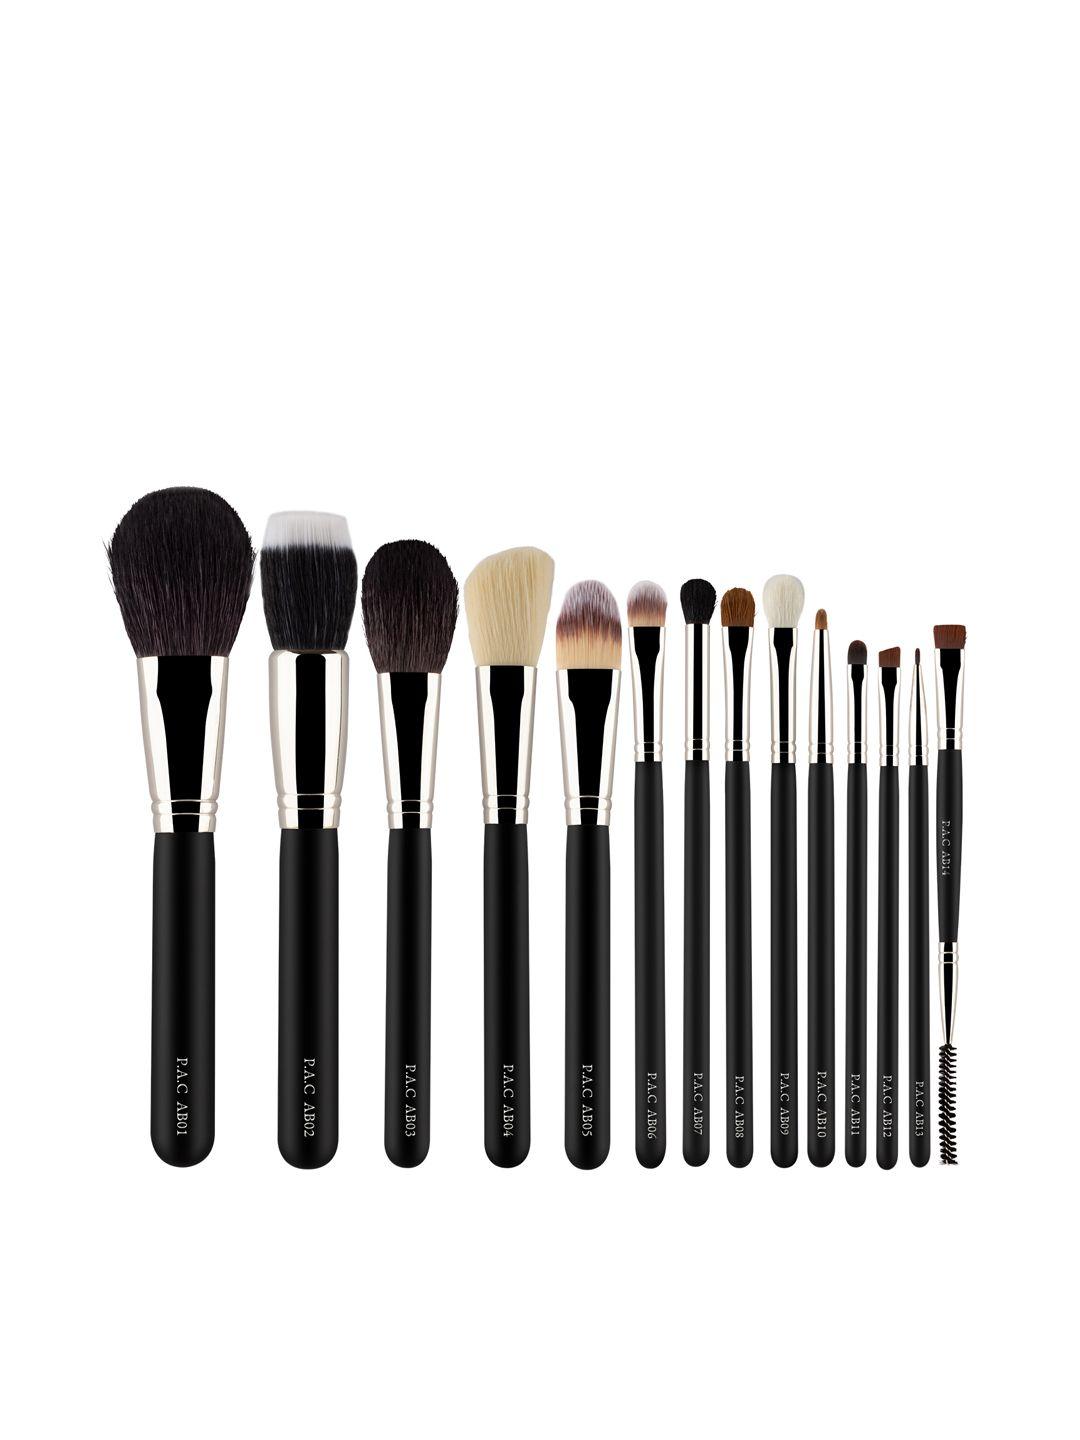 pac absolute basics makeup brushes  - set of 14